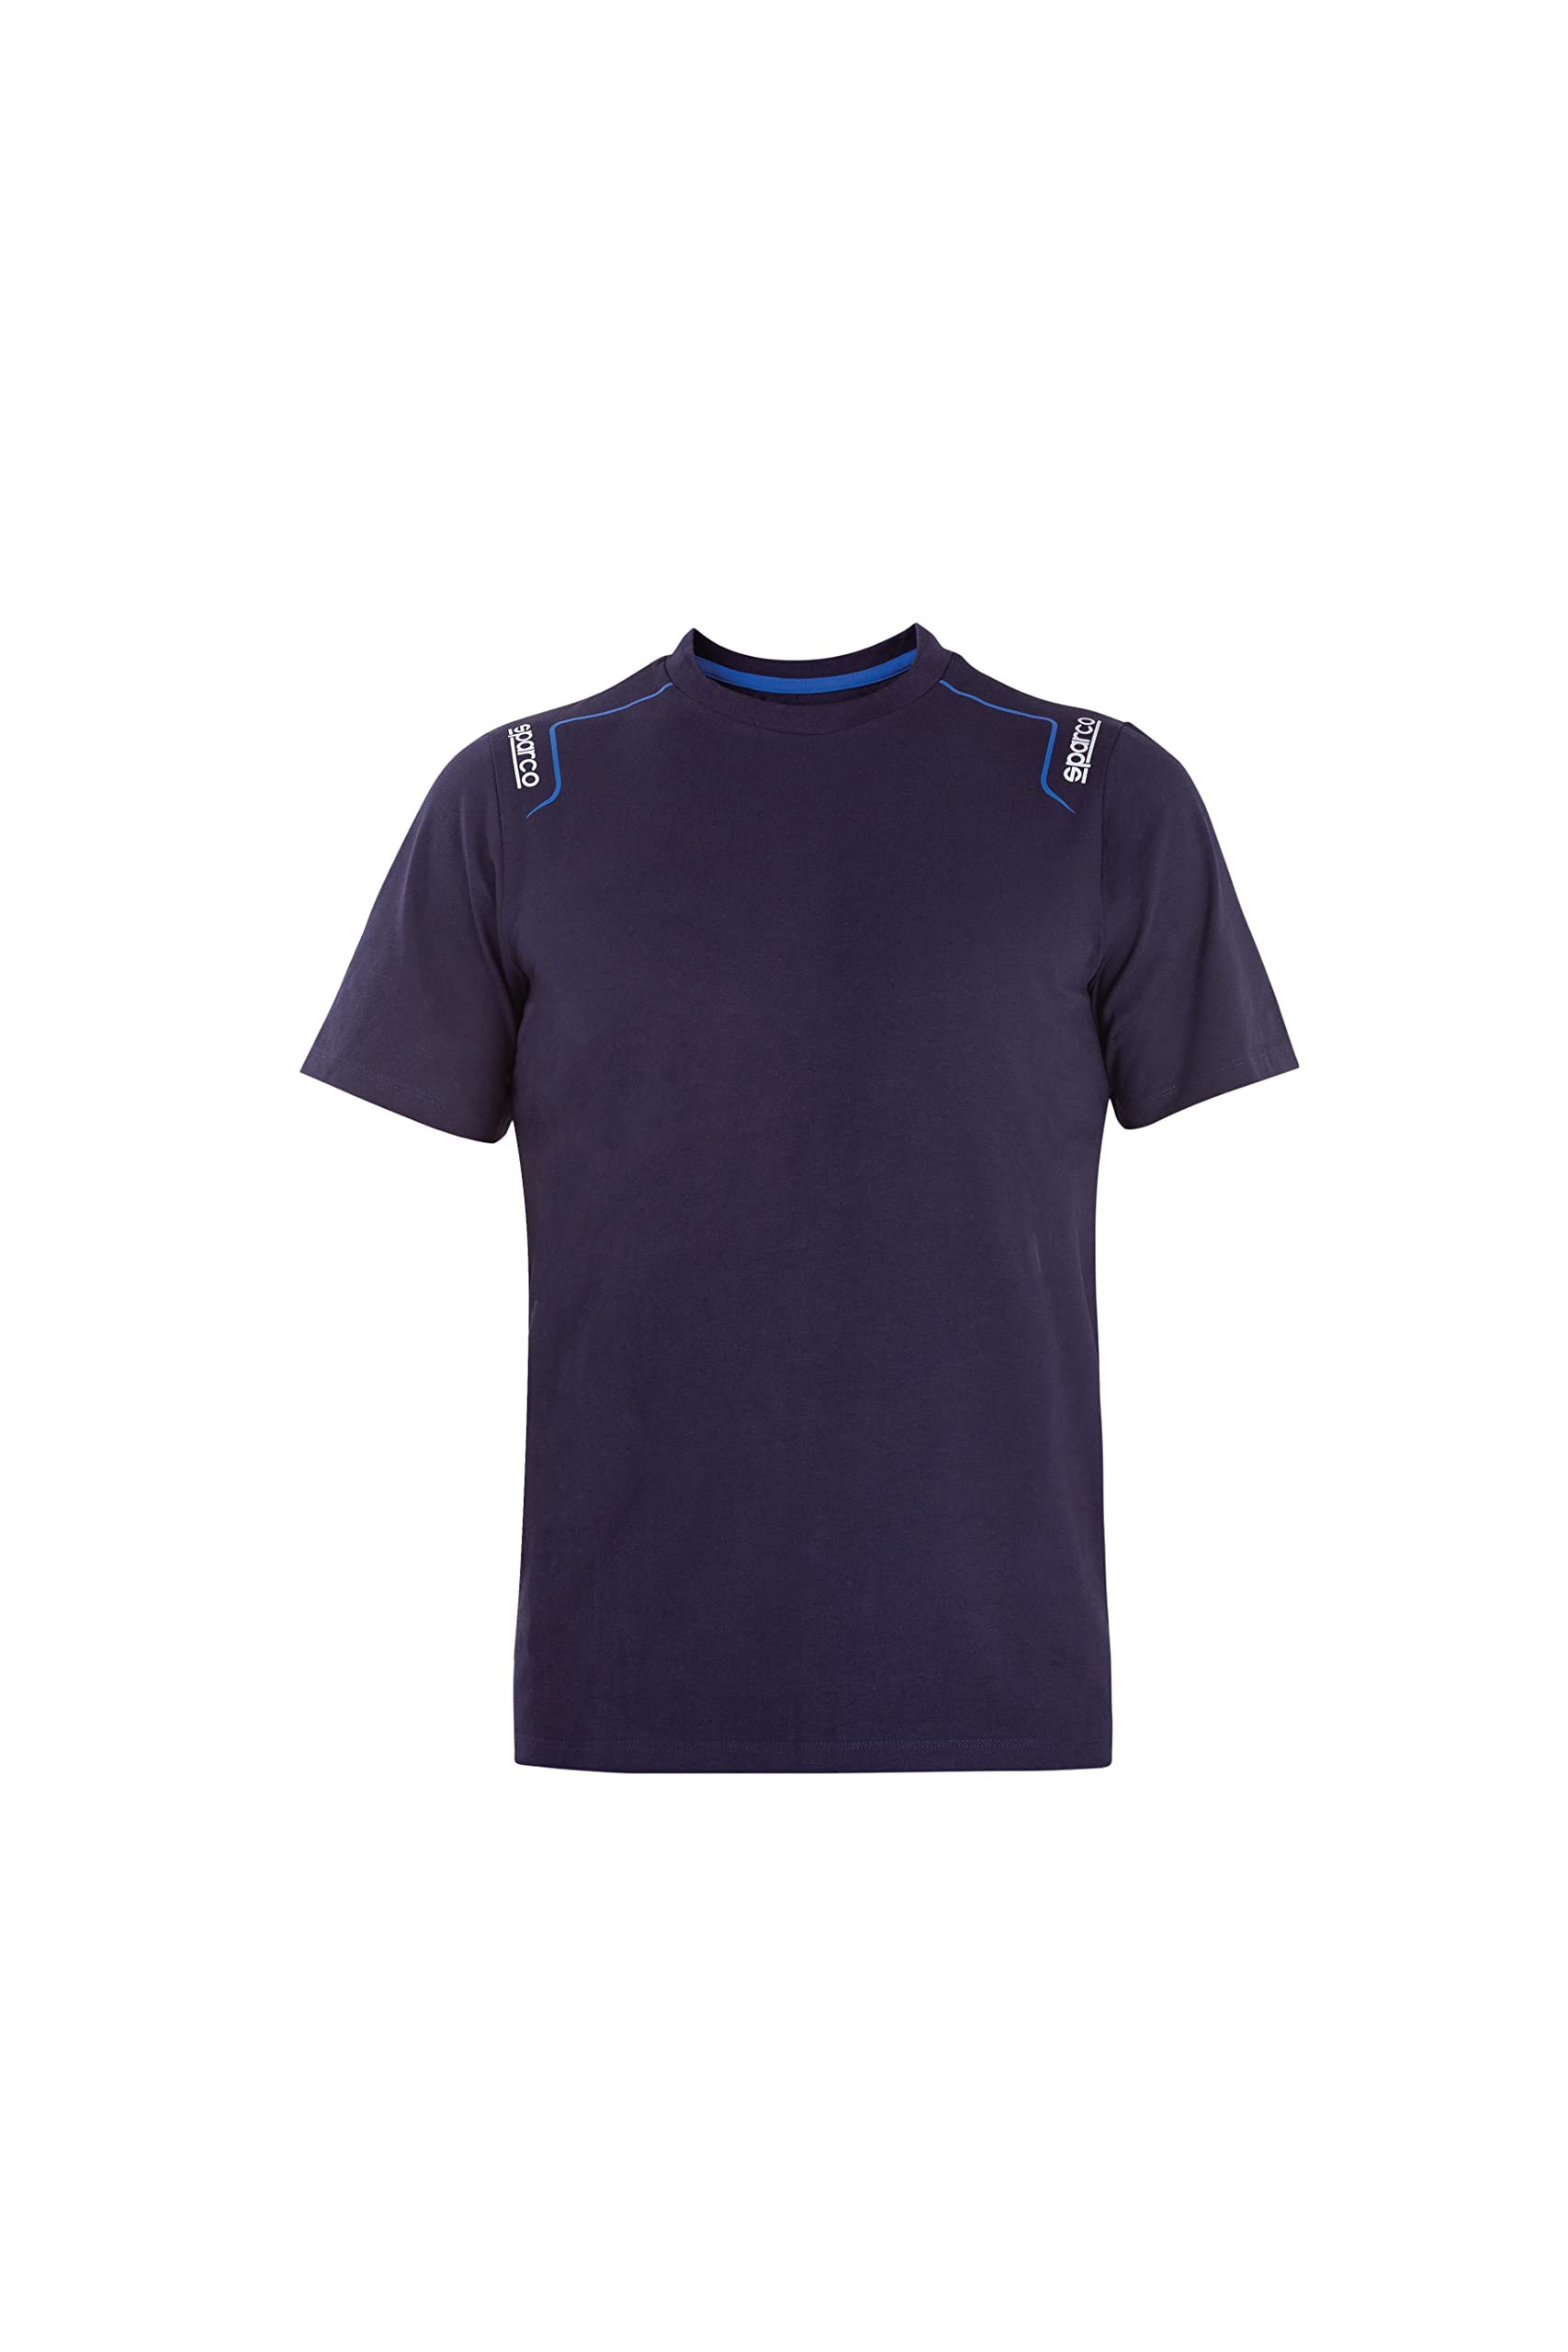 SPARCORACI Camiseta TECH Stretch Azul Marino T XXL von Sparco